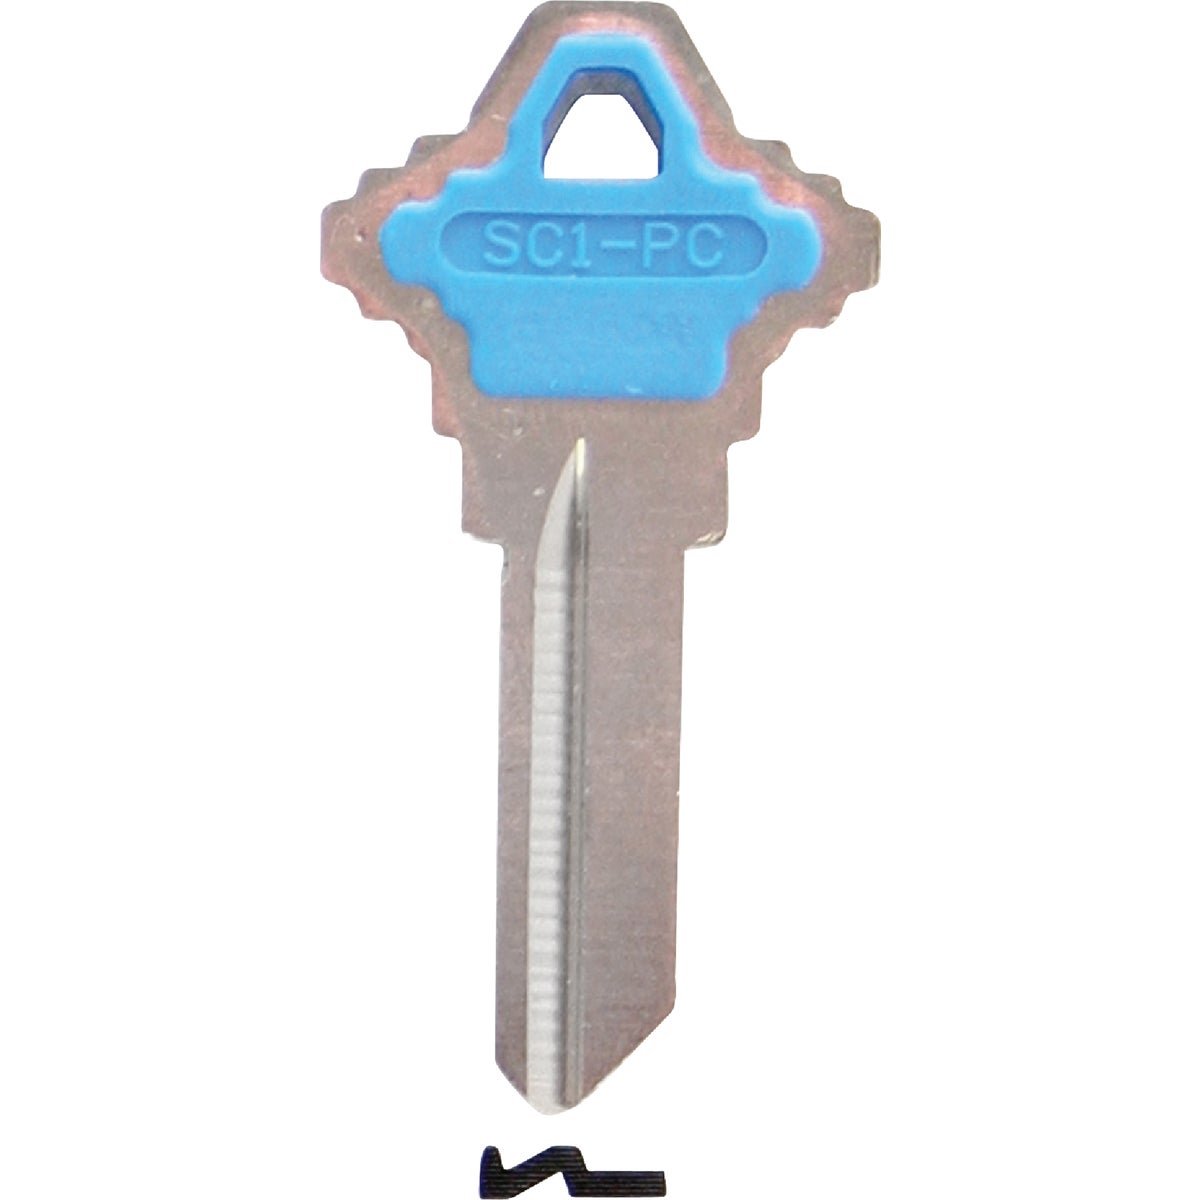 Item 201197, Nickel-plated key blank with plastic insert.